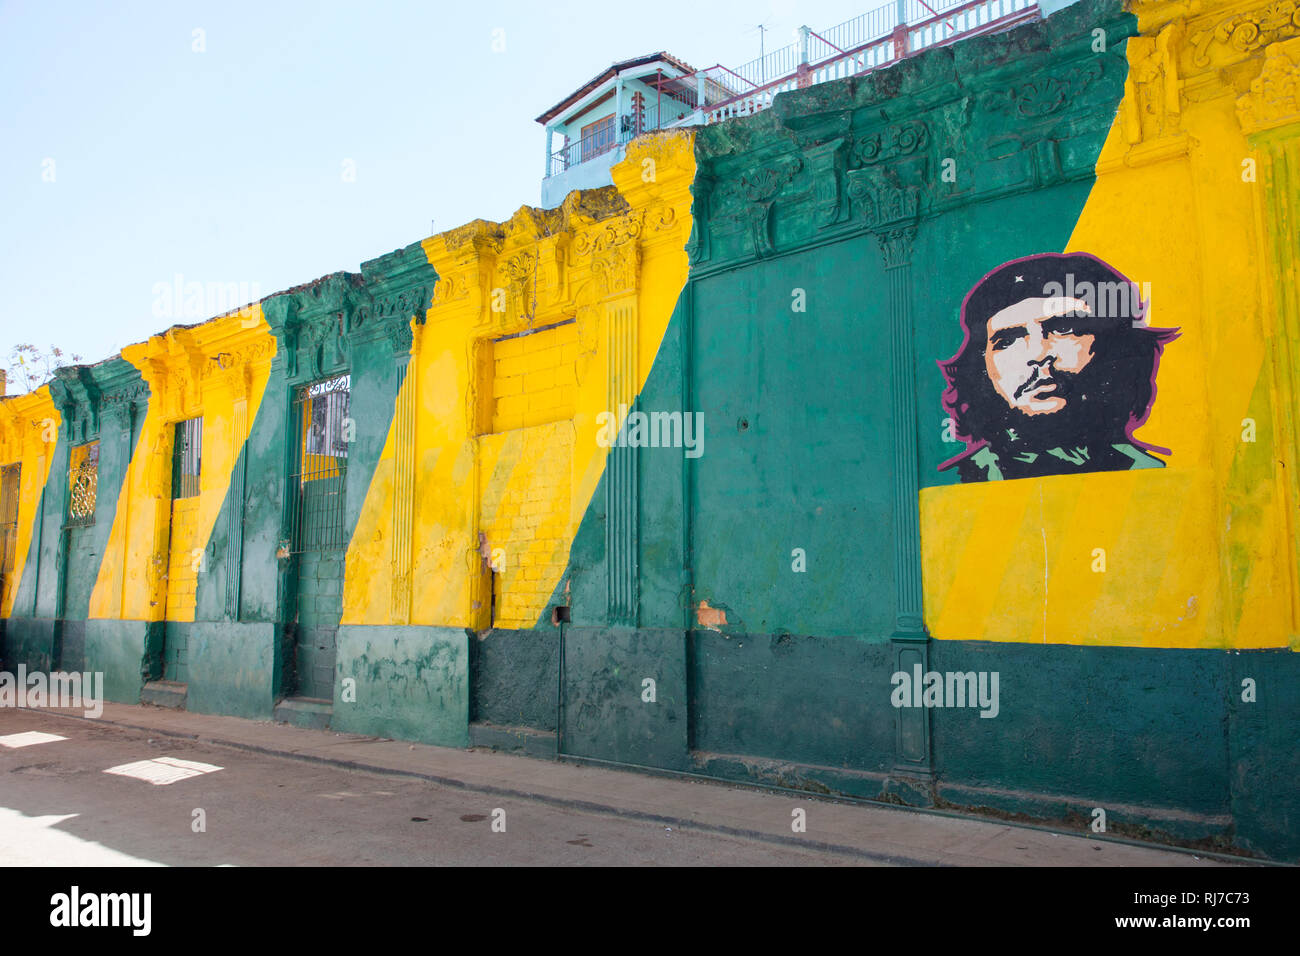 Karibik, Kuba, Cuba, Havanna, La Habana, Graffiti von Che Guevara auf gelb grün gemusterter Mauer Stock Photo